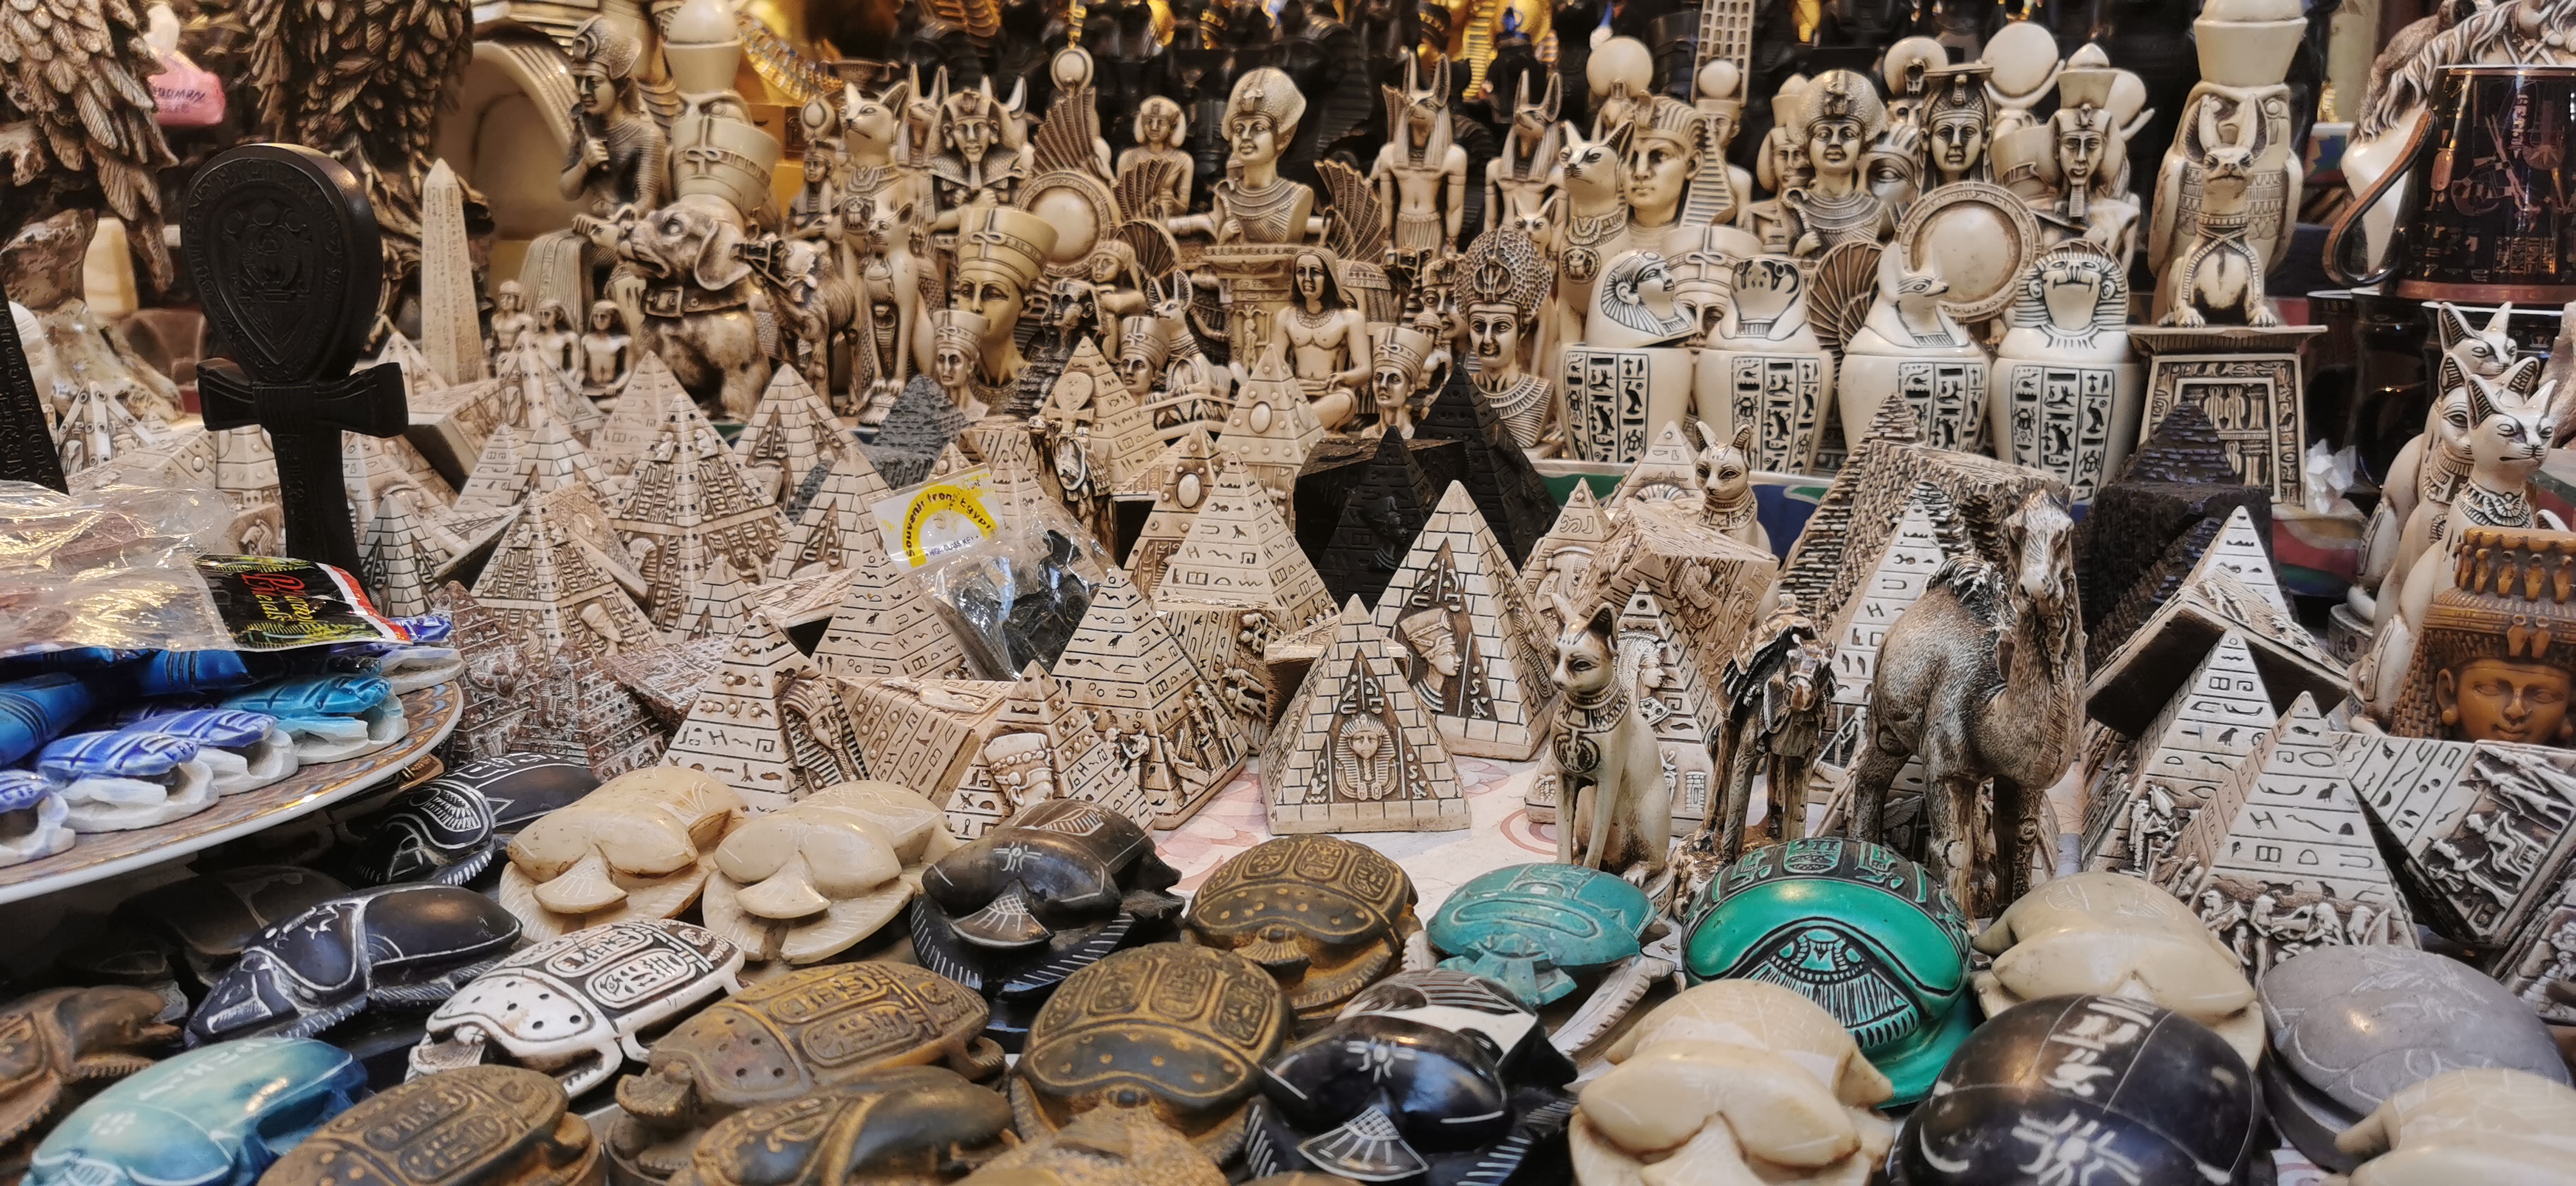 Various souvenirs are on display at the Khan El-Khalili market in Cairo. /CGTN